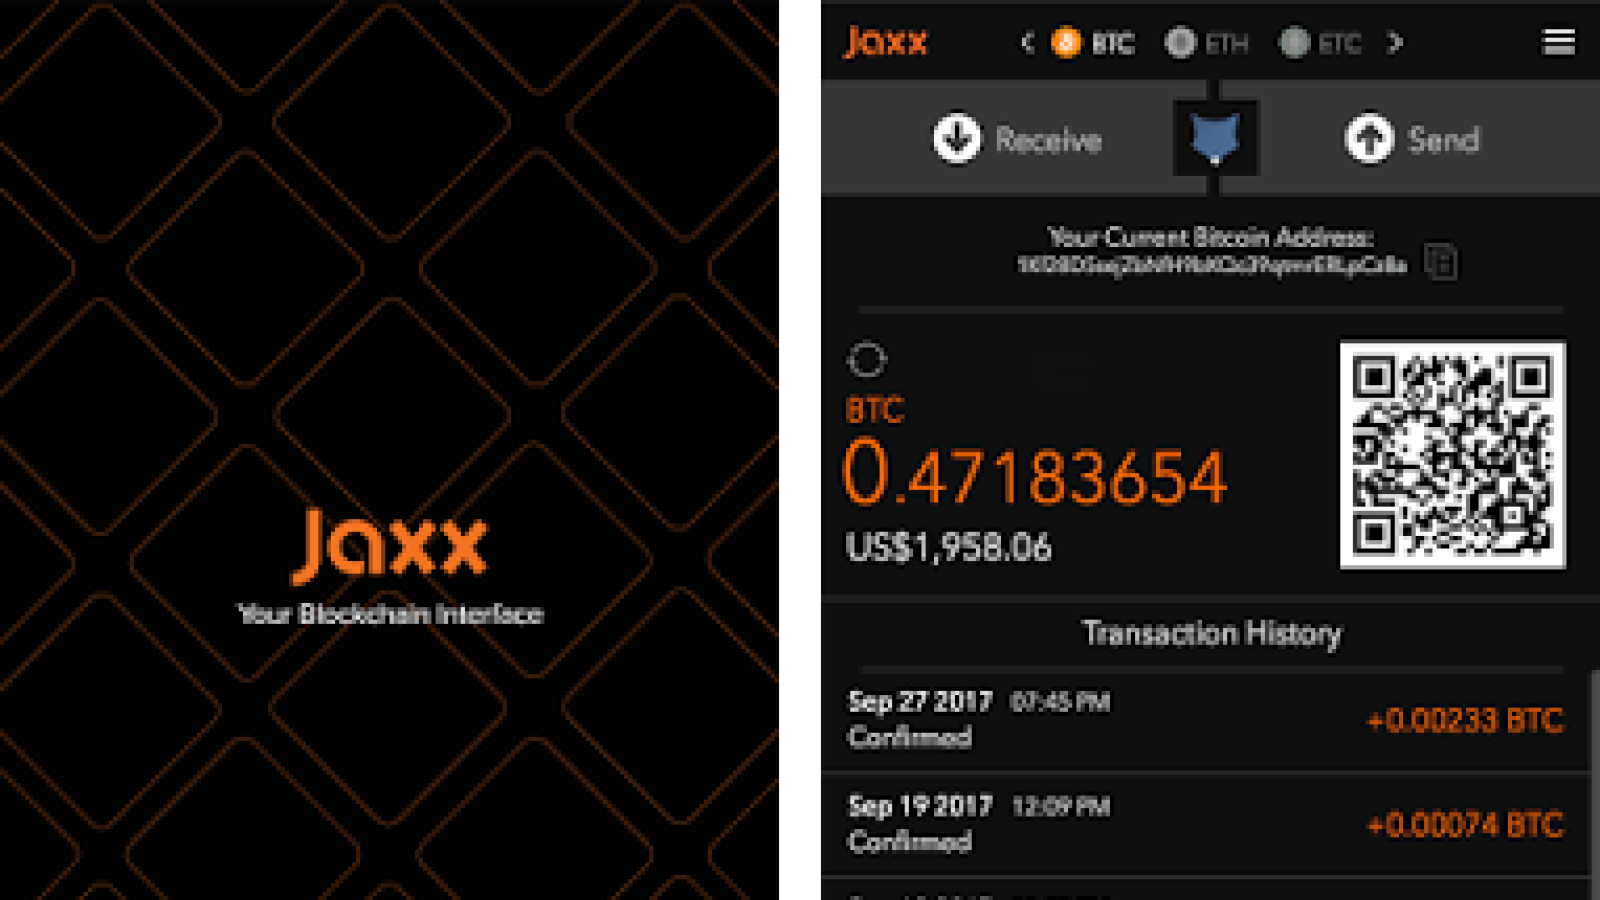 Jaxx mobile application shows transaction info